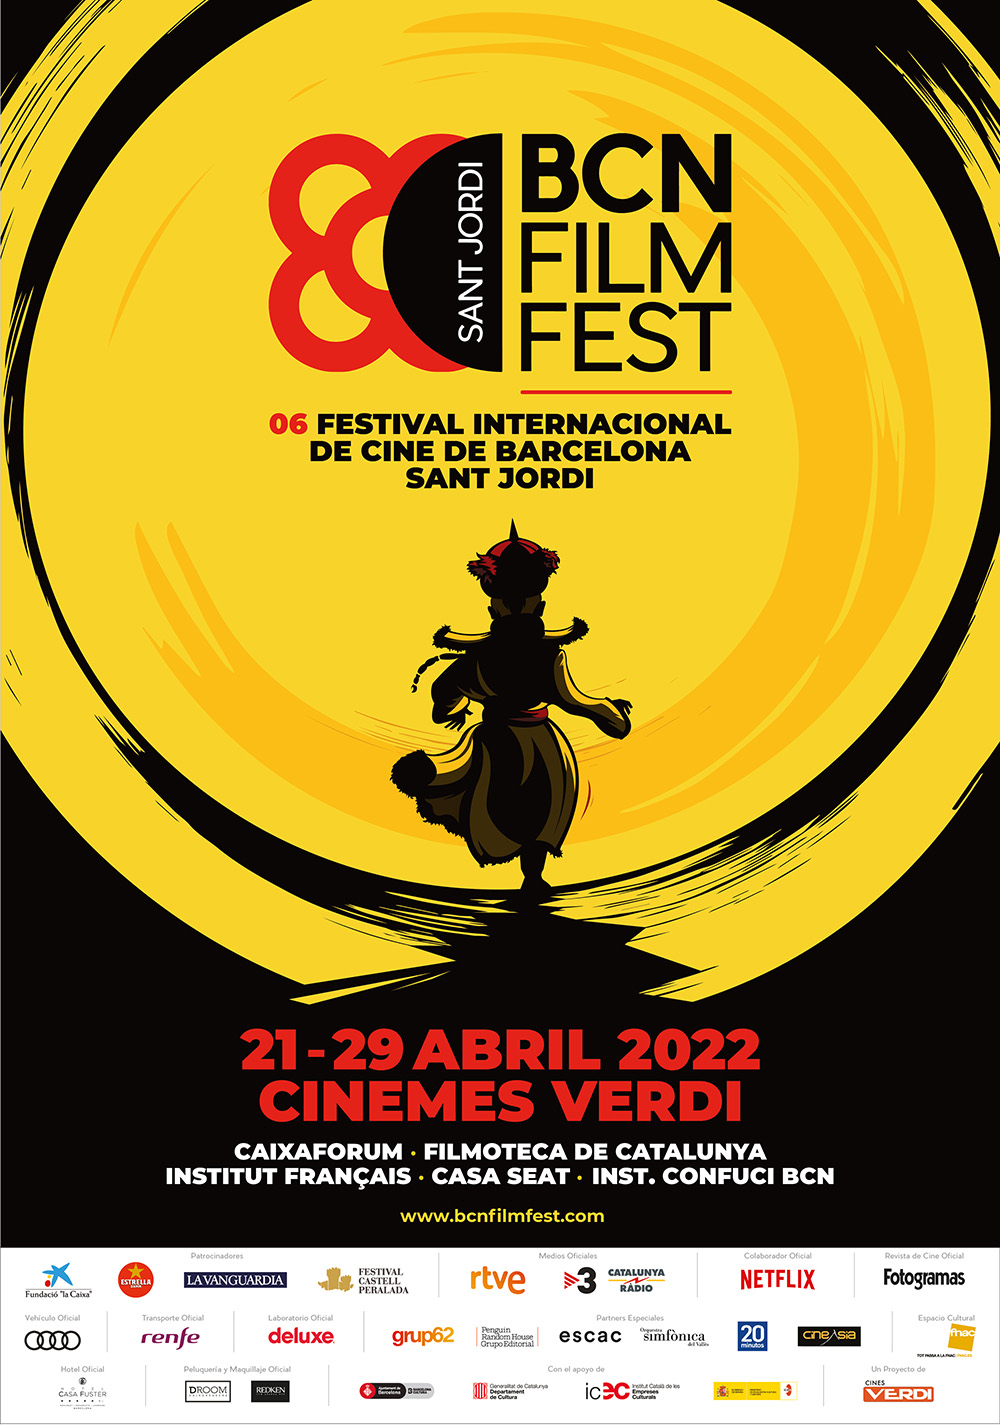 El BCN Film Fest 2022 rinde homenaje al productor Jeremy Thomas